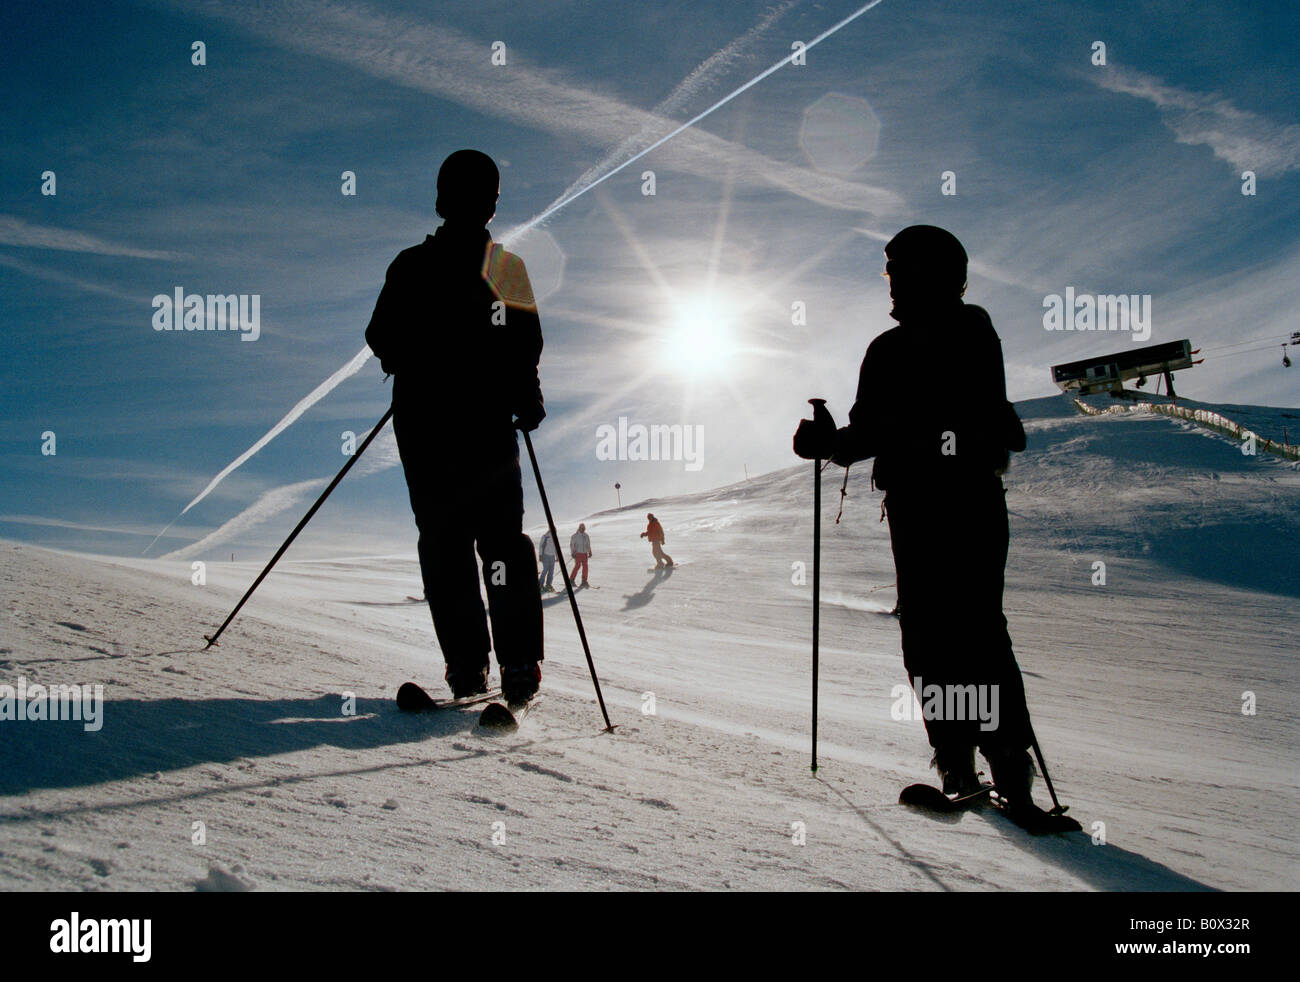 Skiers on a ski slope Stock Photo